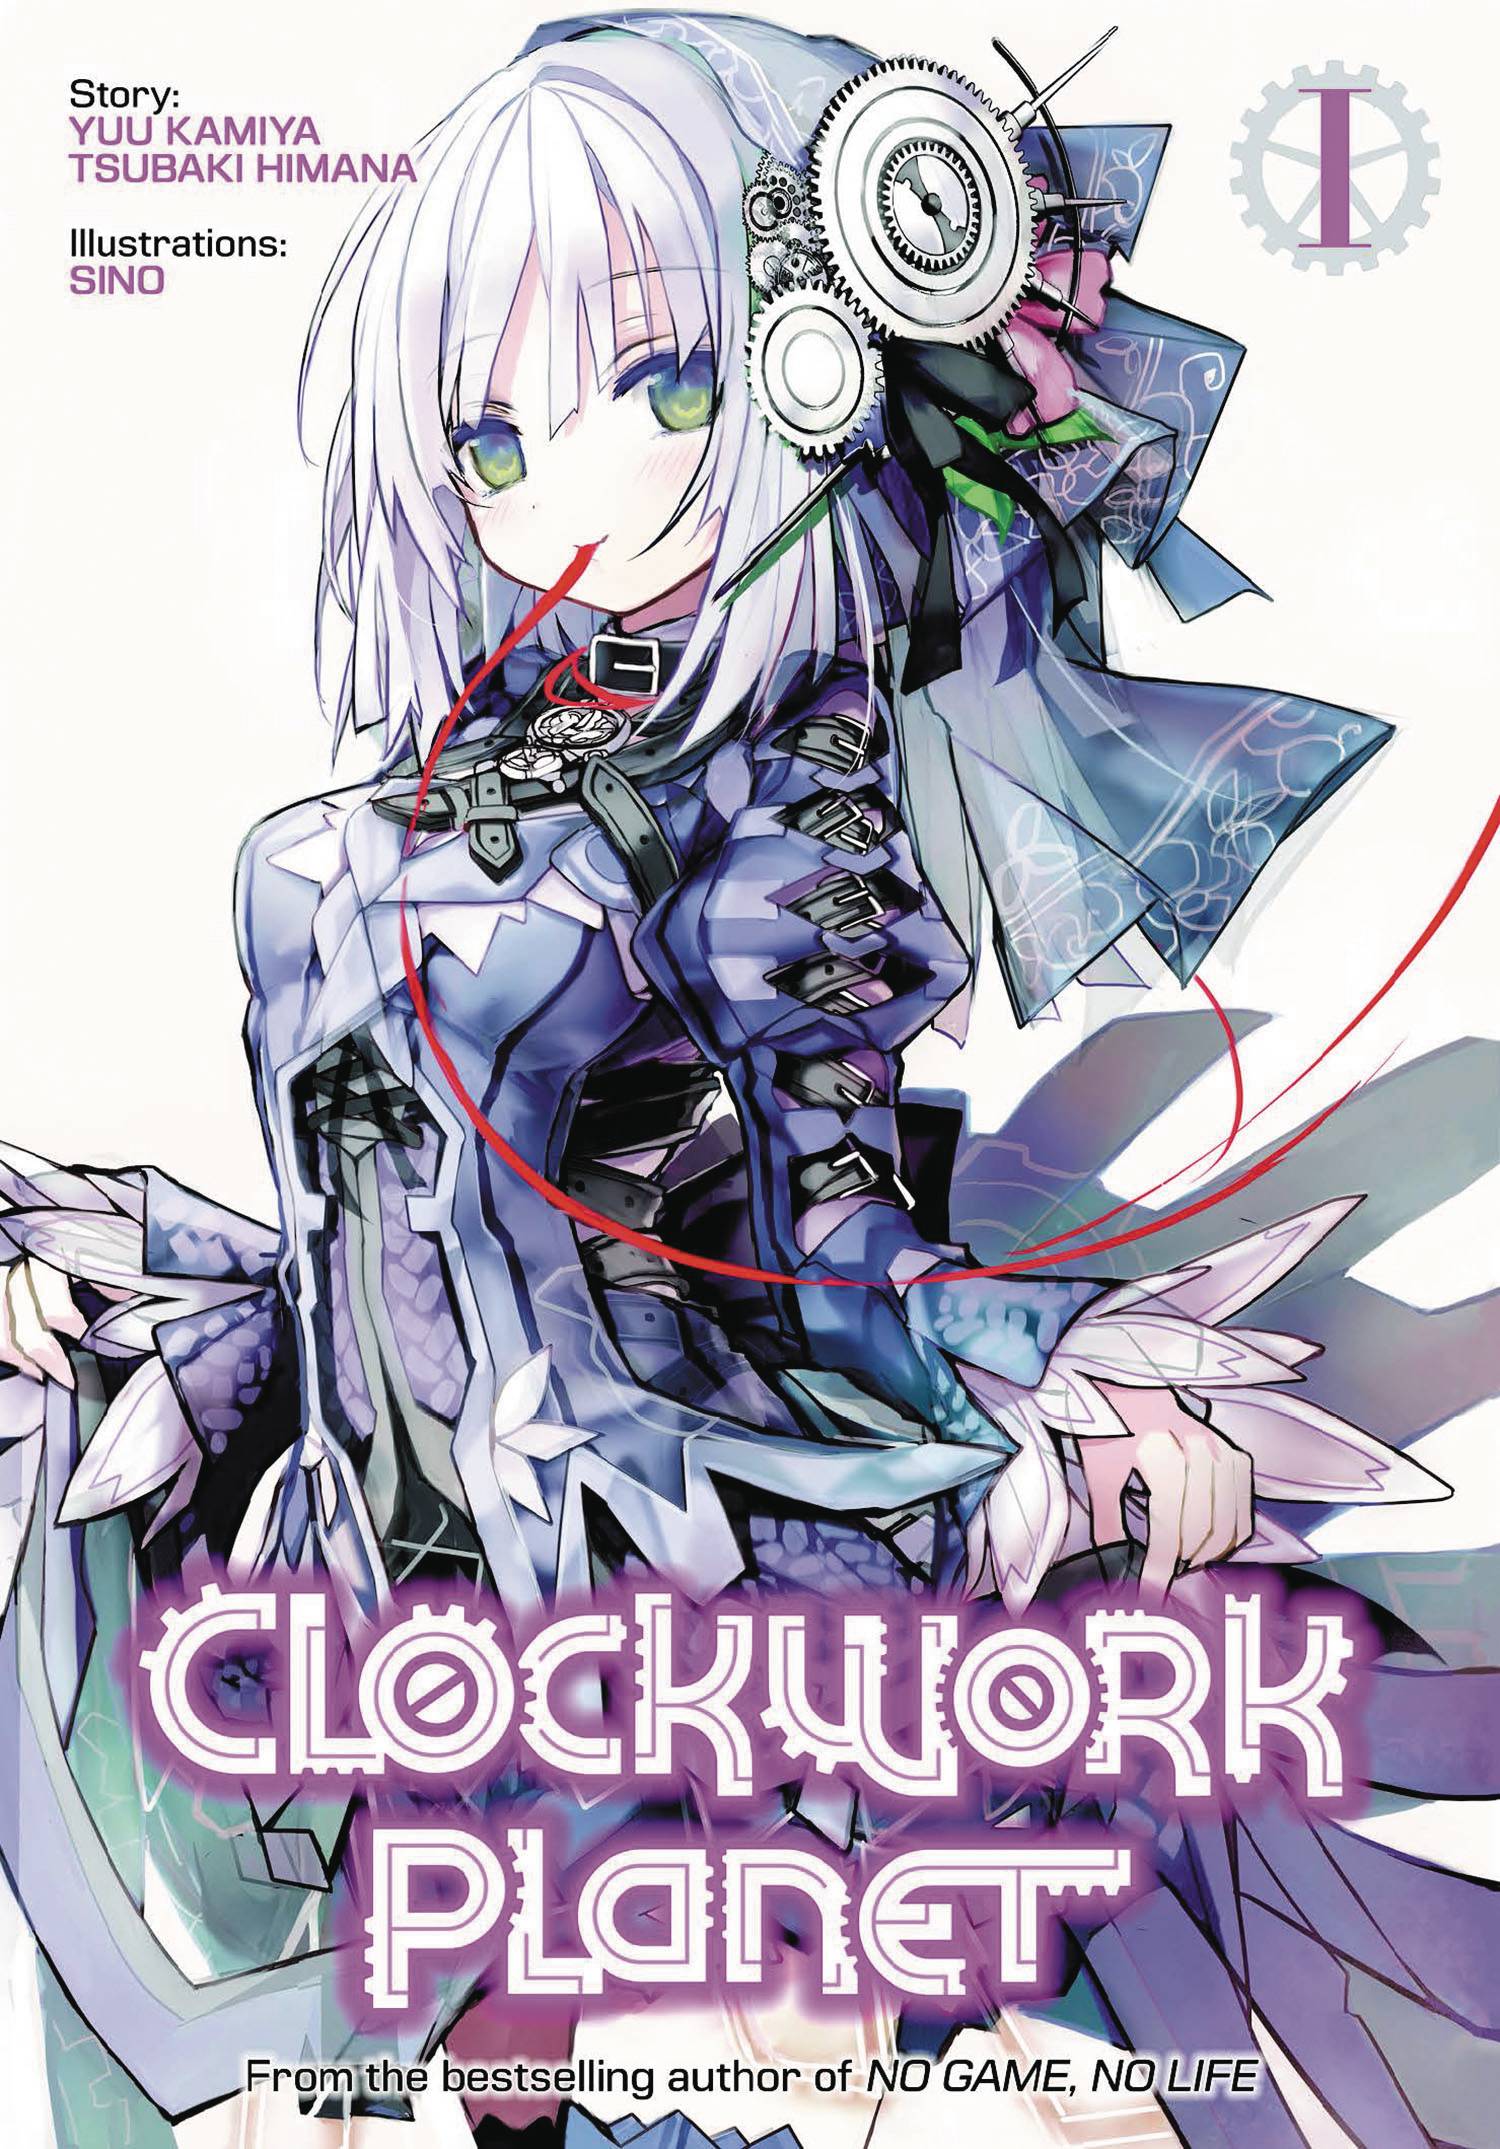 Clockwork Planet (manga) - Anime News Network